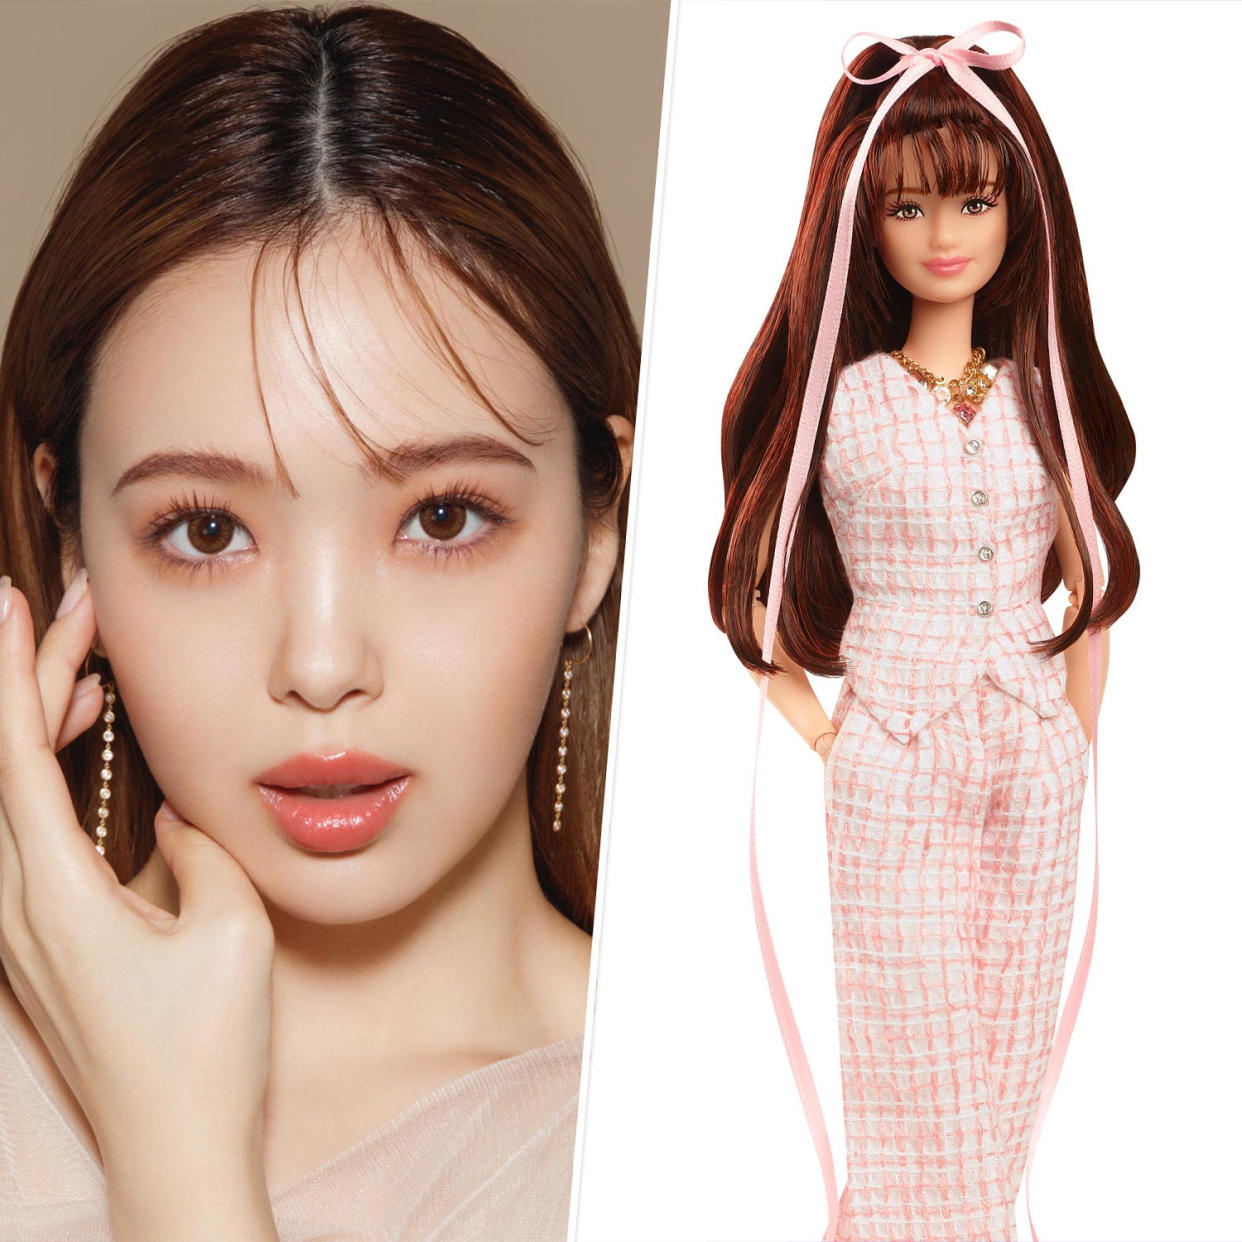 Nicole Fujita Barbie Doll (Mattel)